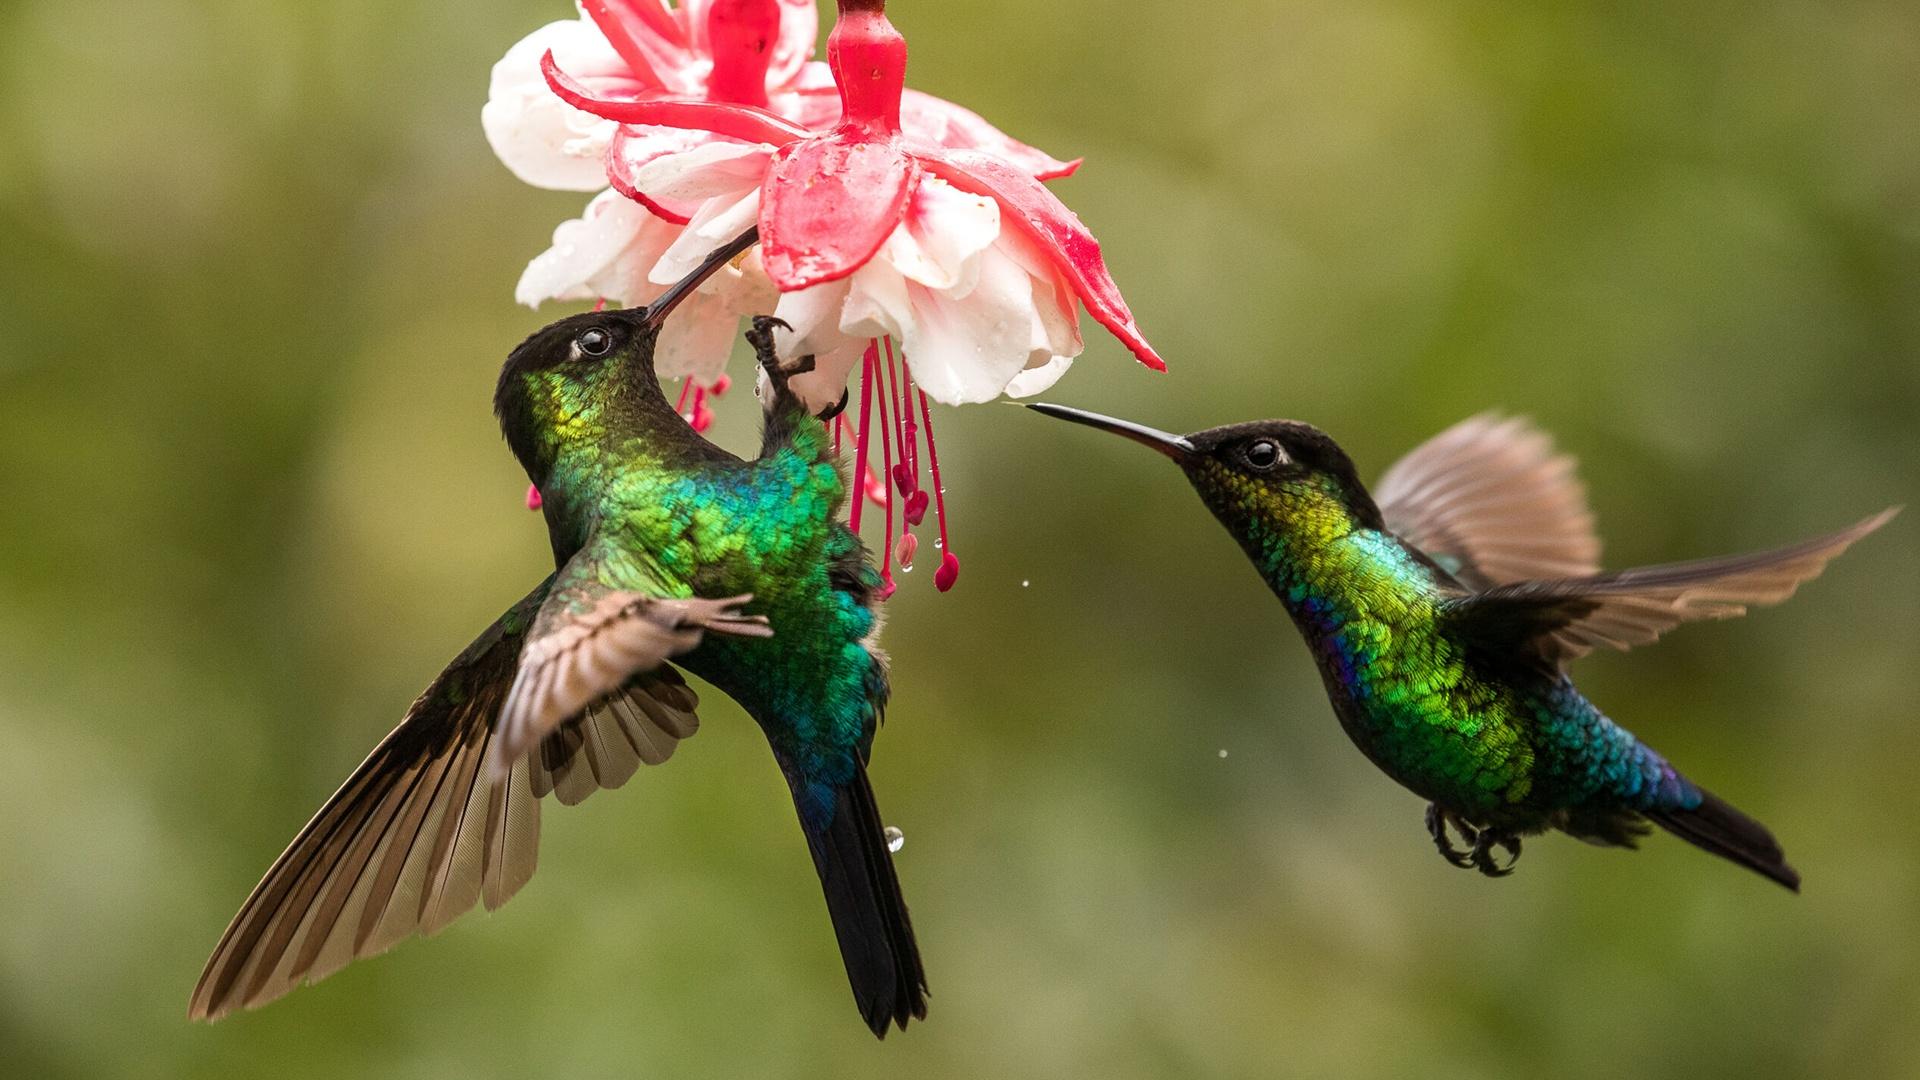 hummingbird high's kitchen refresh reveal » Hummingbird High